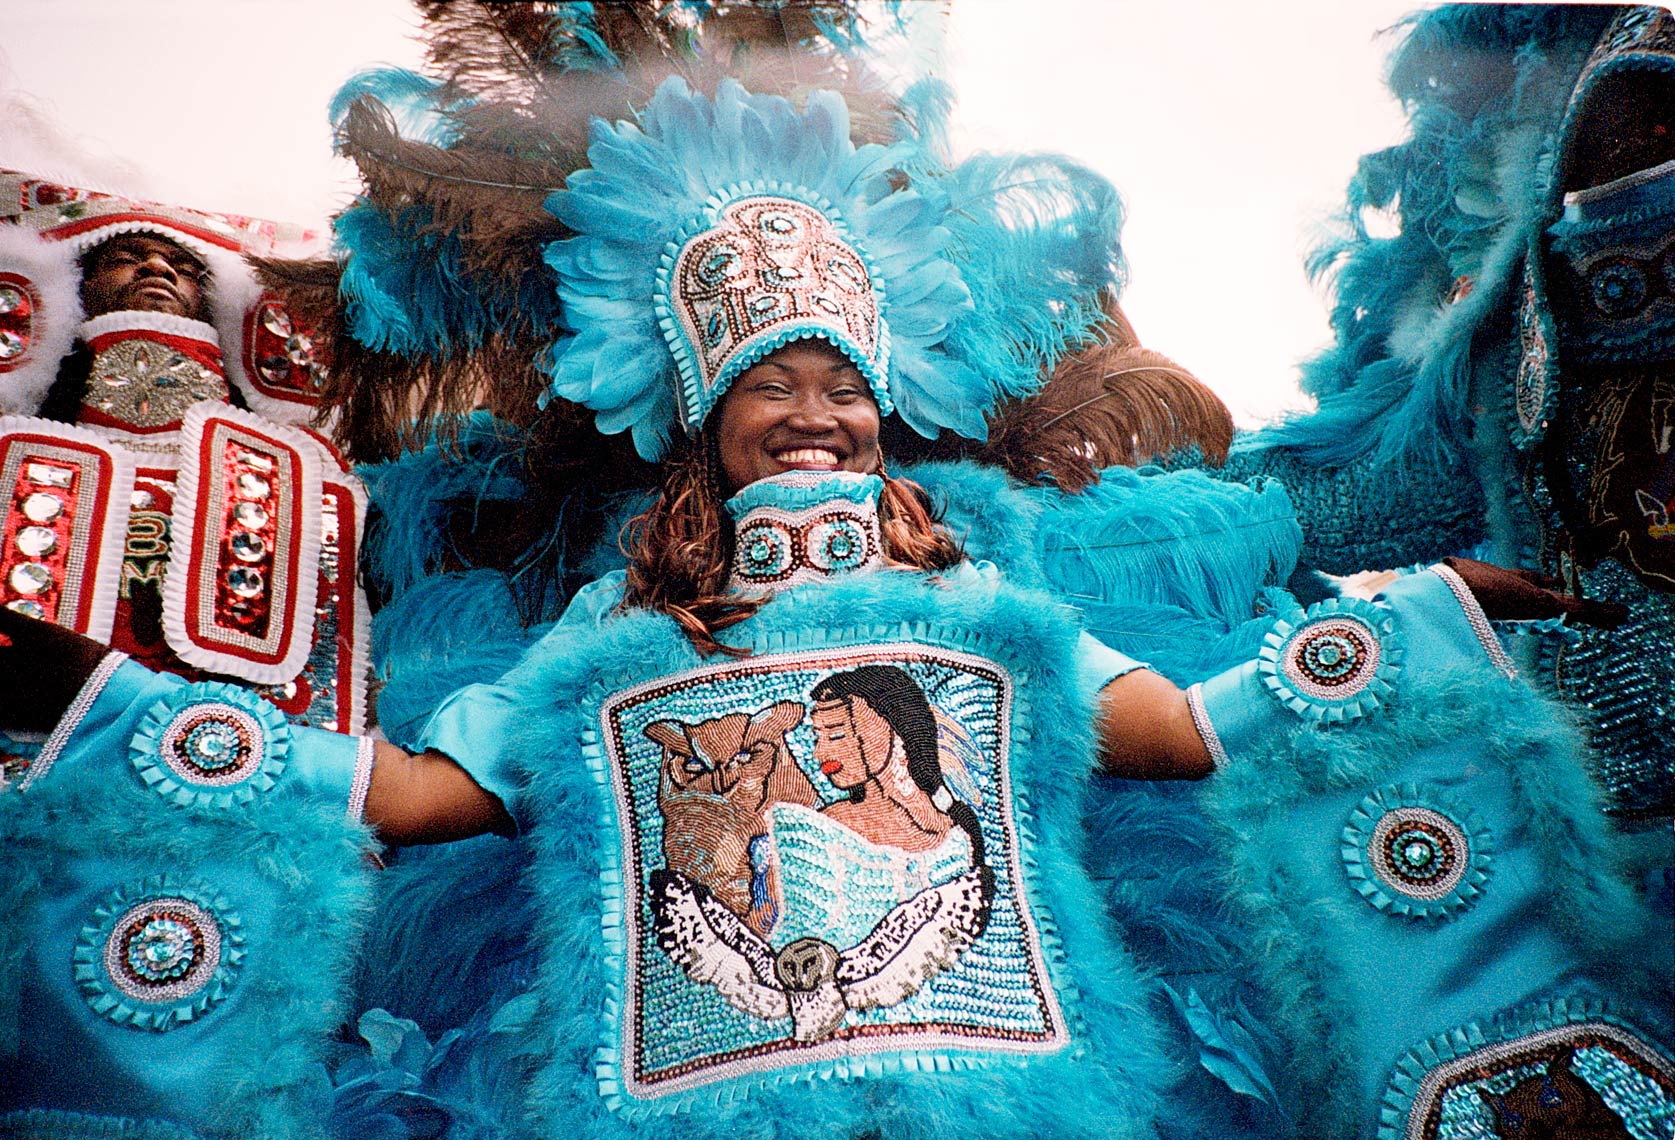 Queen of the Super Sunday Mardi Gras Parade NOLA